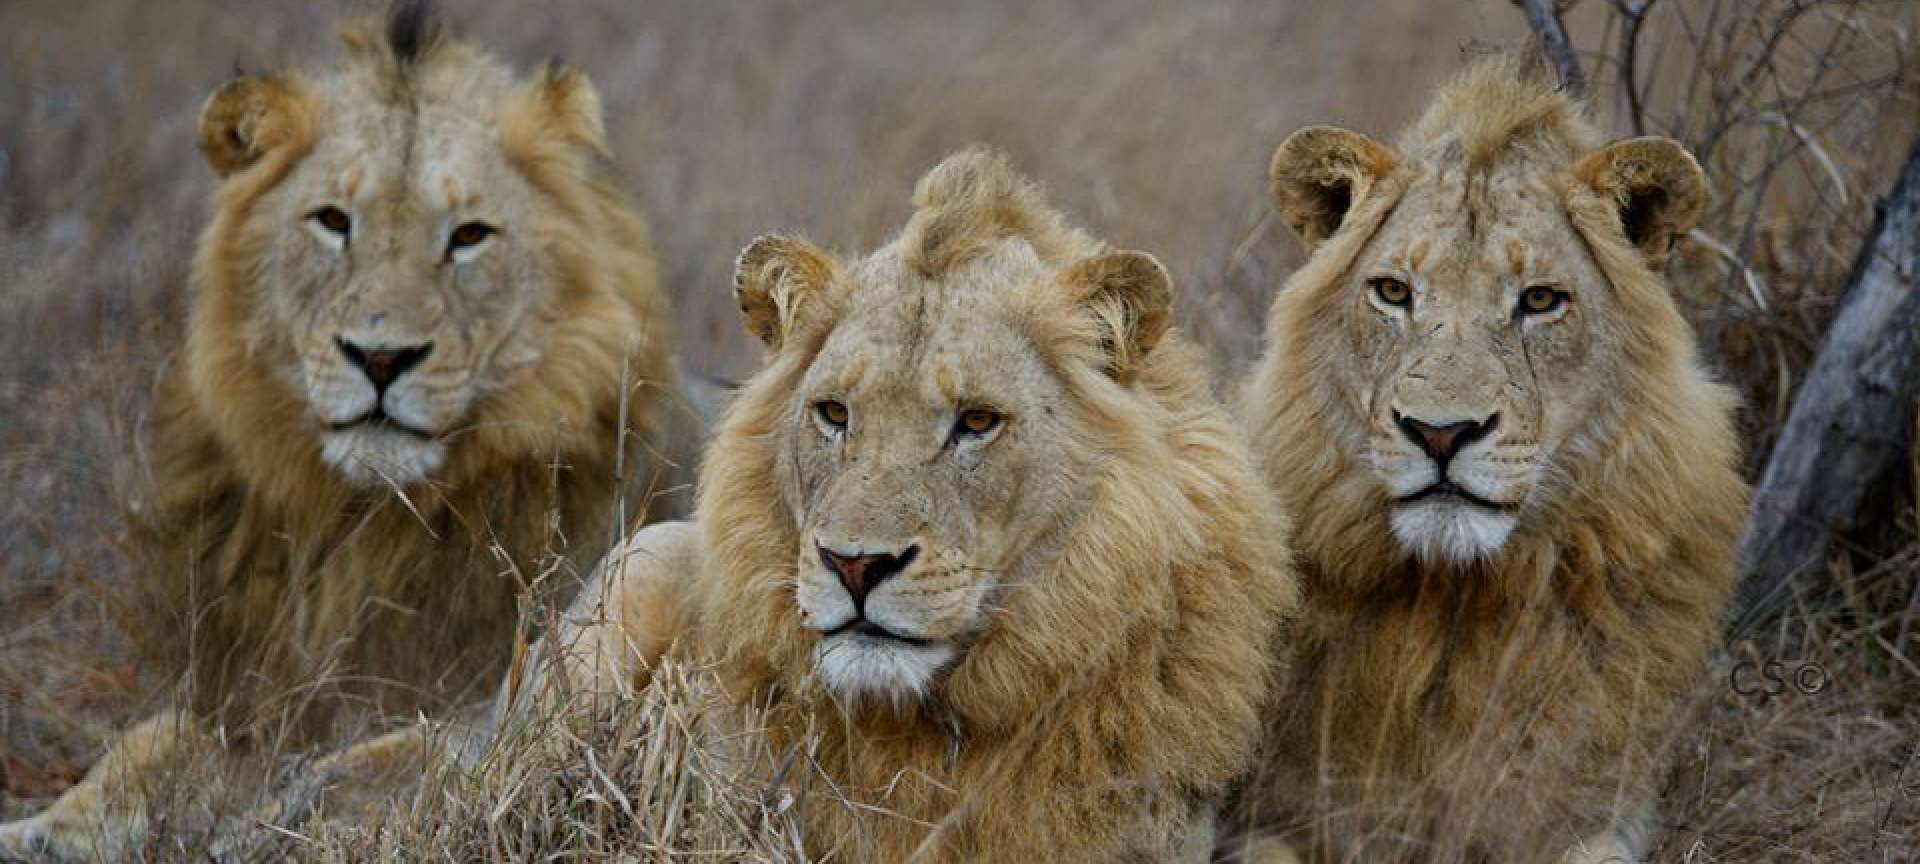 lions in the kruger national park wildlife safari